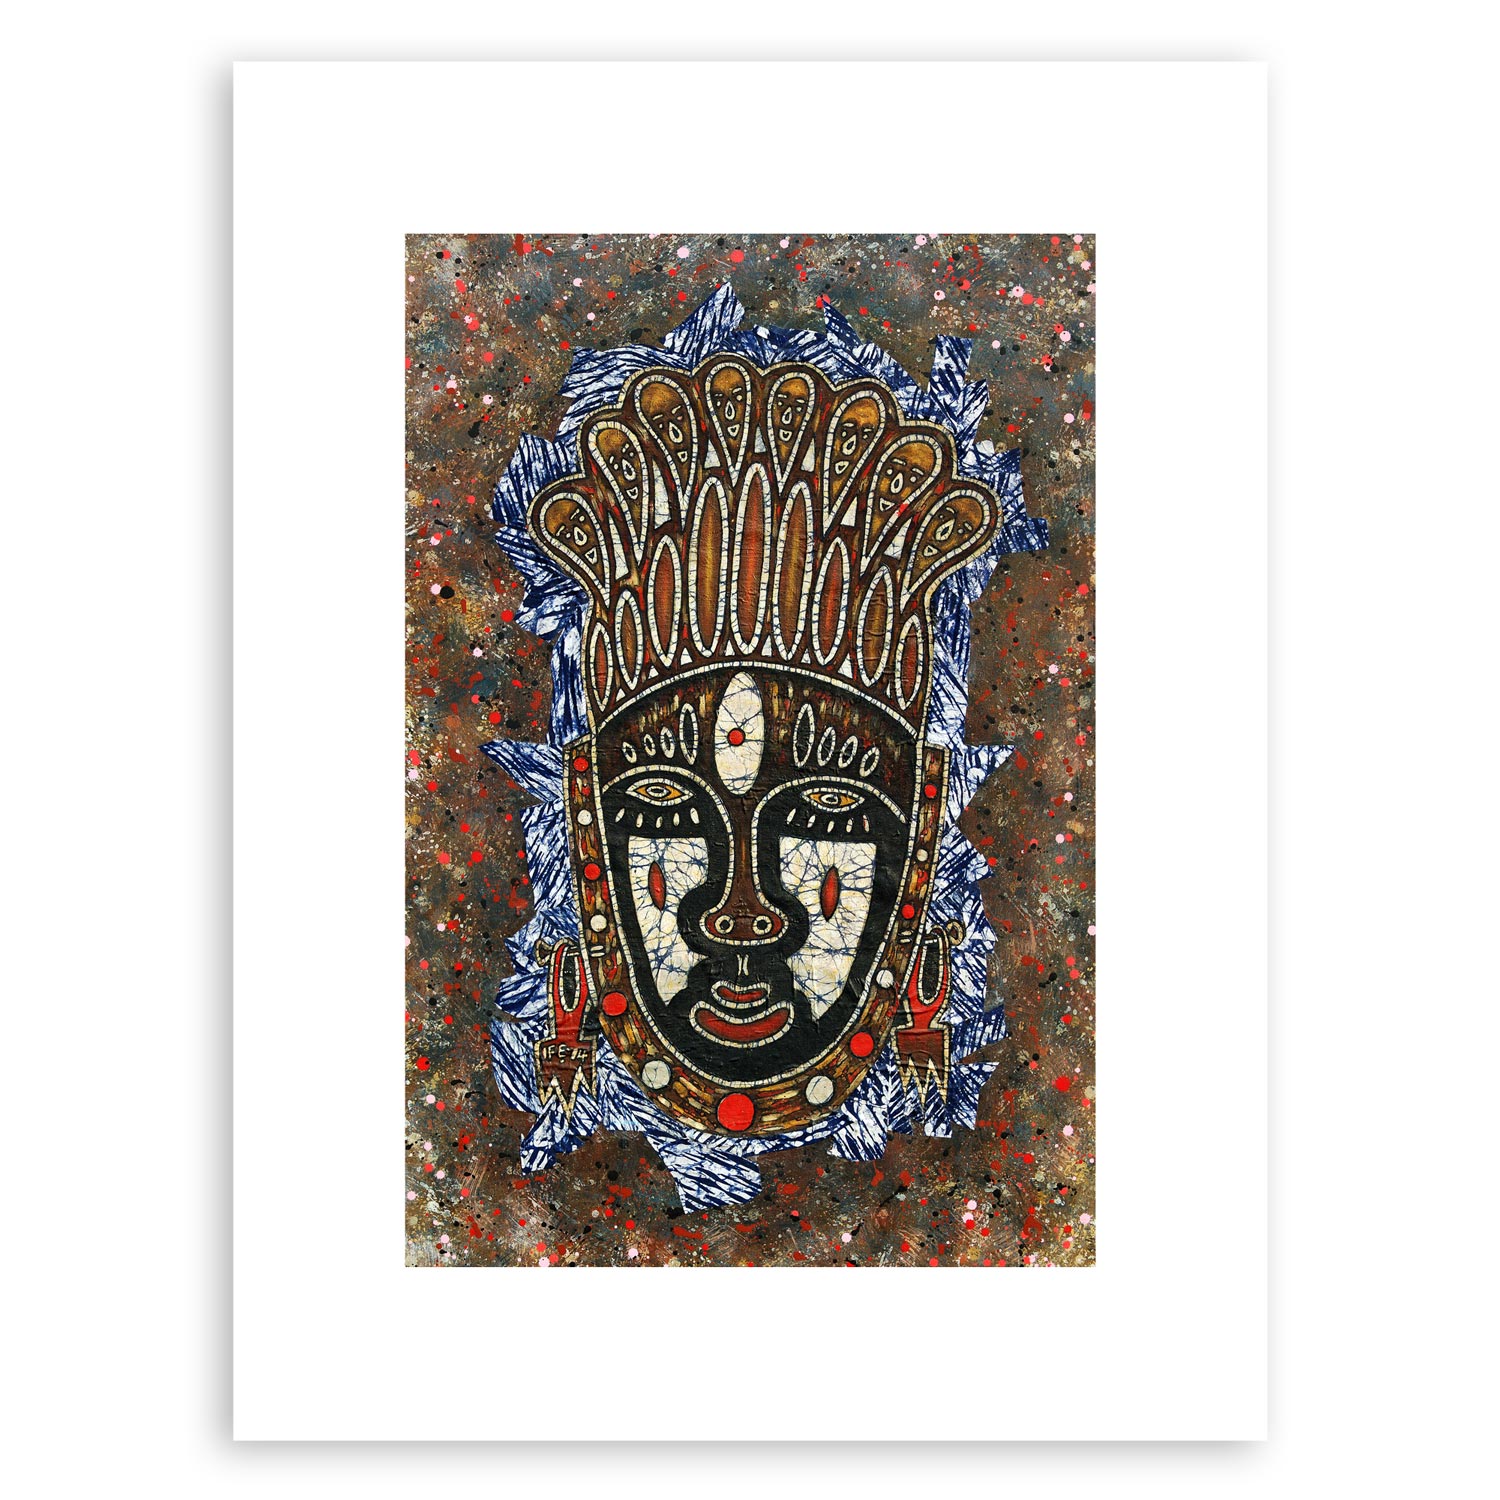 Festac Mask – Art print of abstract African mask artwork